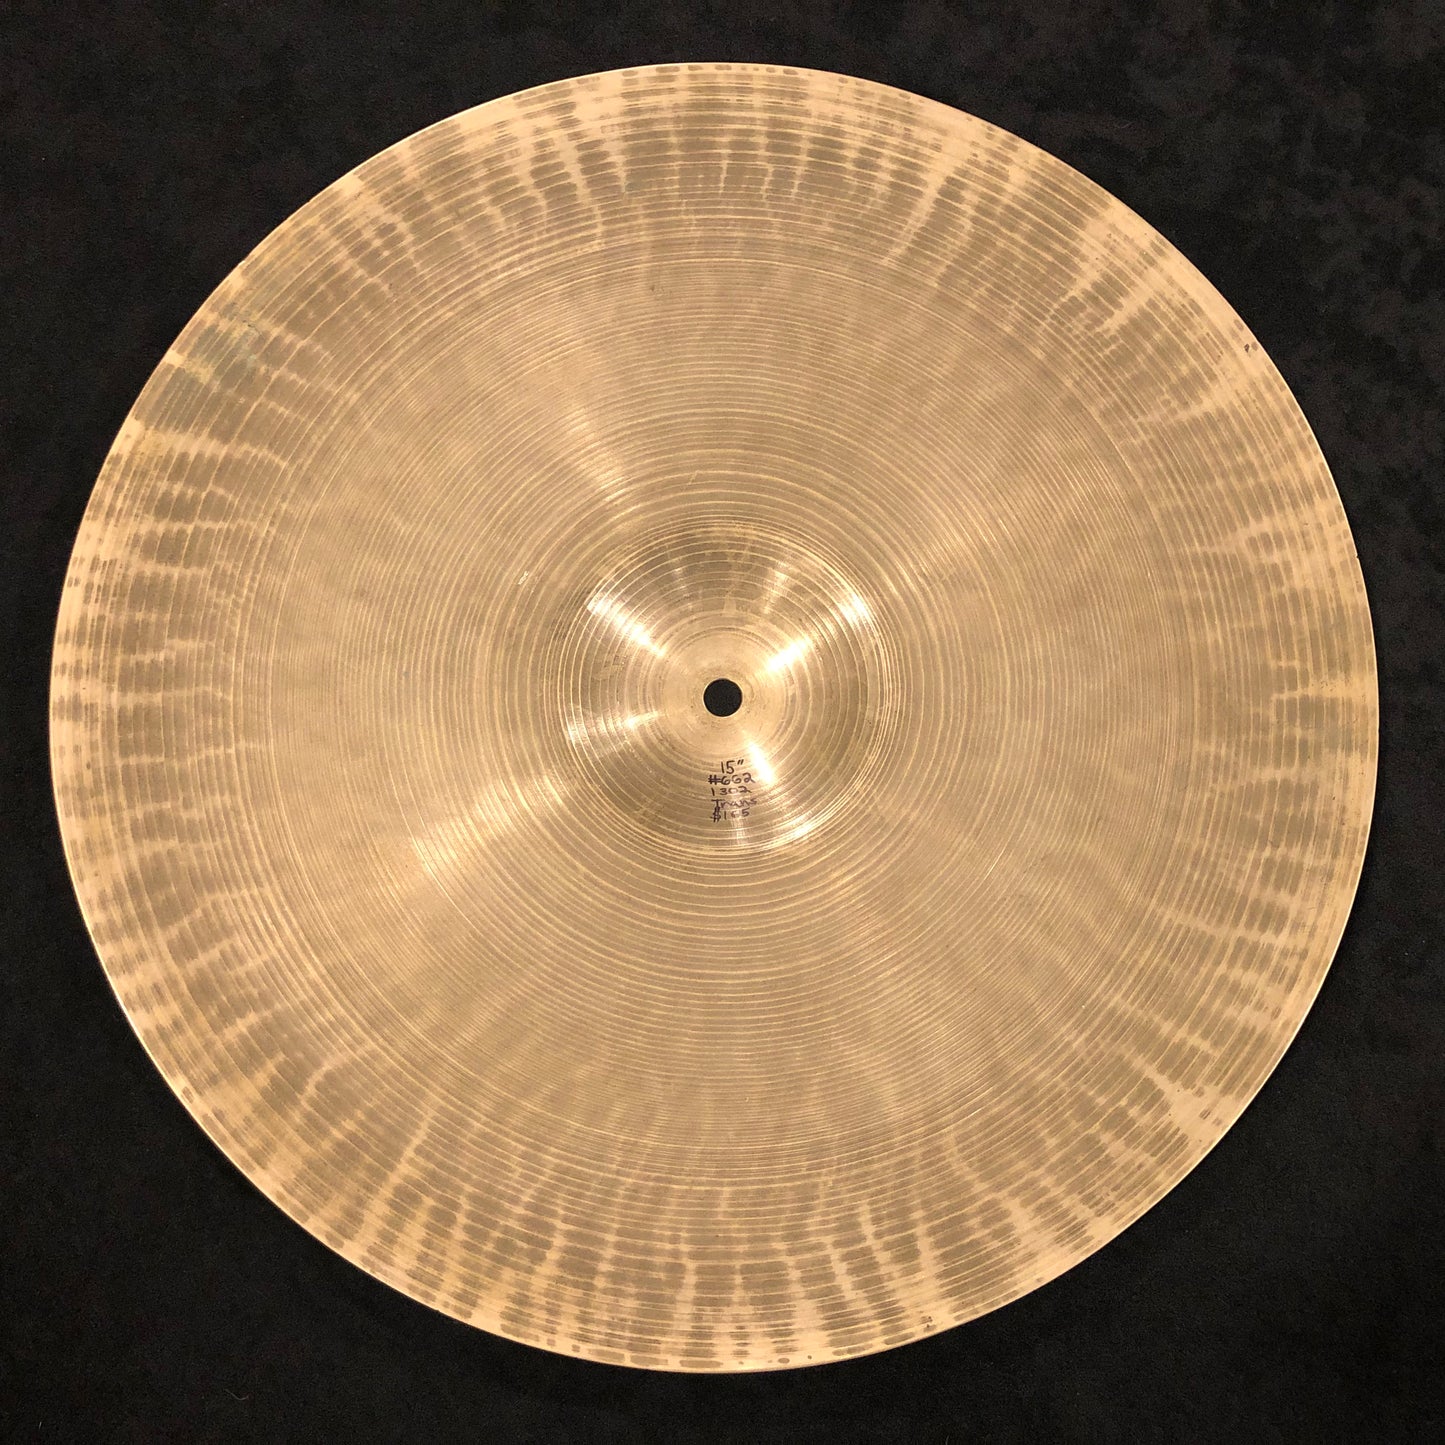 15" Zildjian A 1947-53 Trans Stamp Hi-Hat Single / Small Ride Cymbal 1302g #662